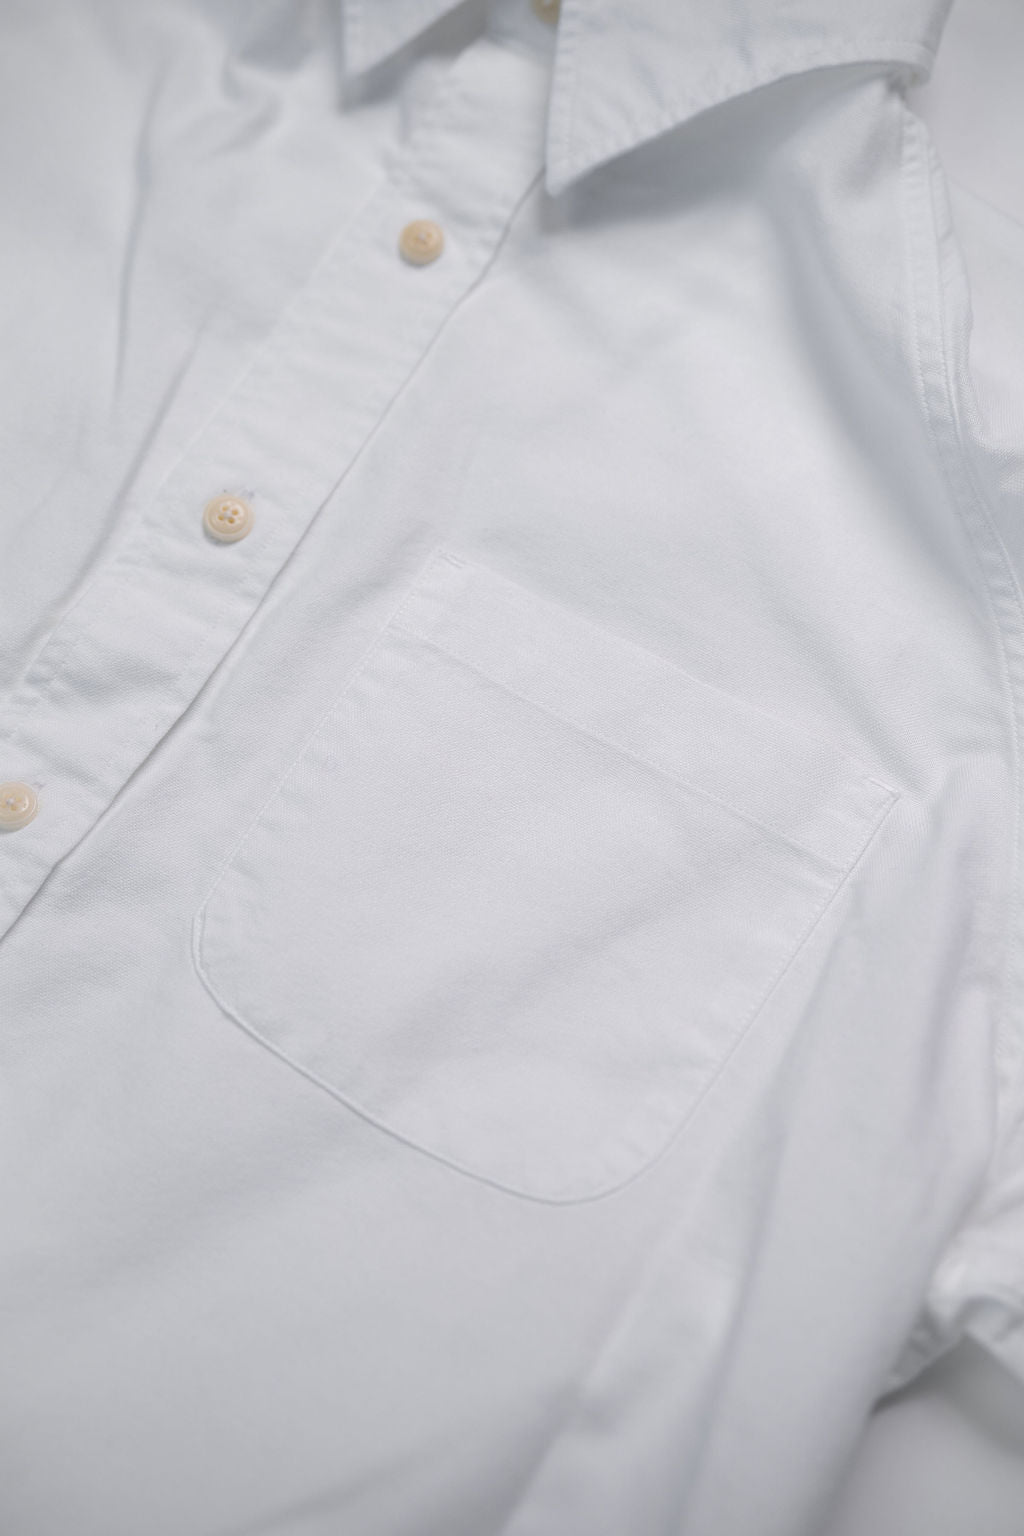 Heimat Textil Oxford Shirt - White